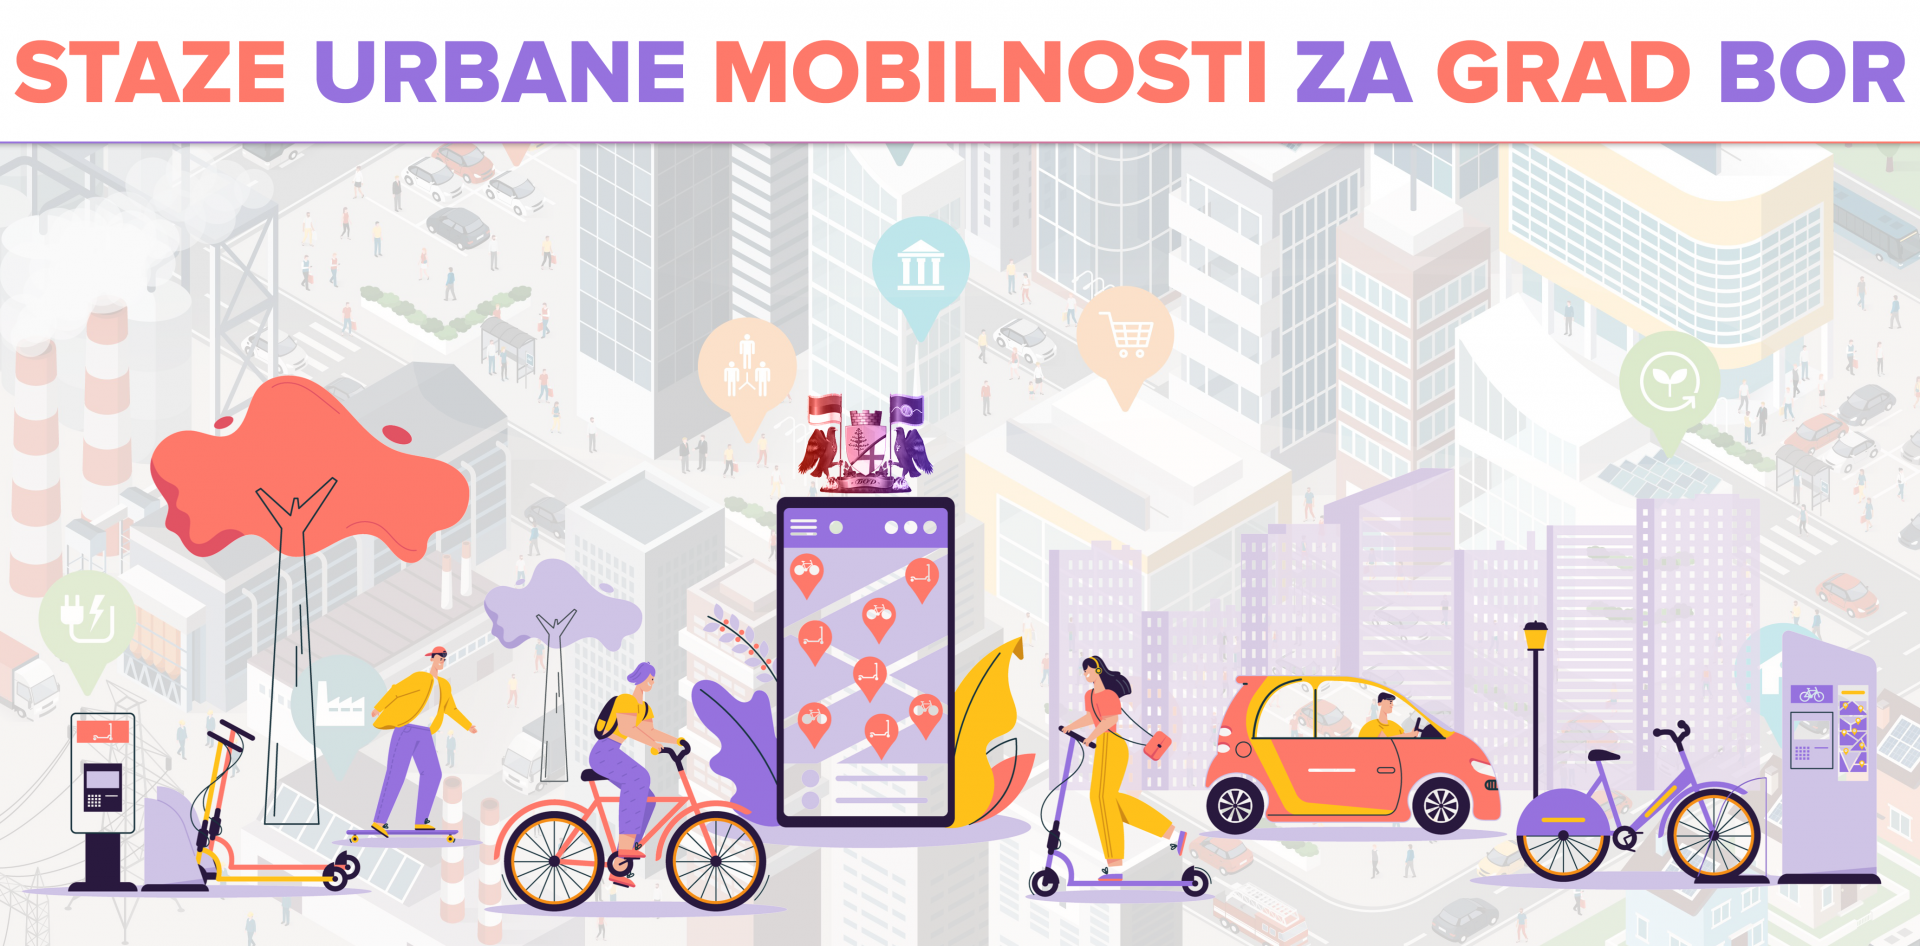 assets/img/staze-urbane-mobilnosti-bor-1.png